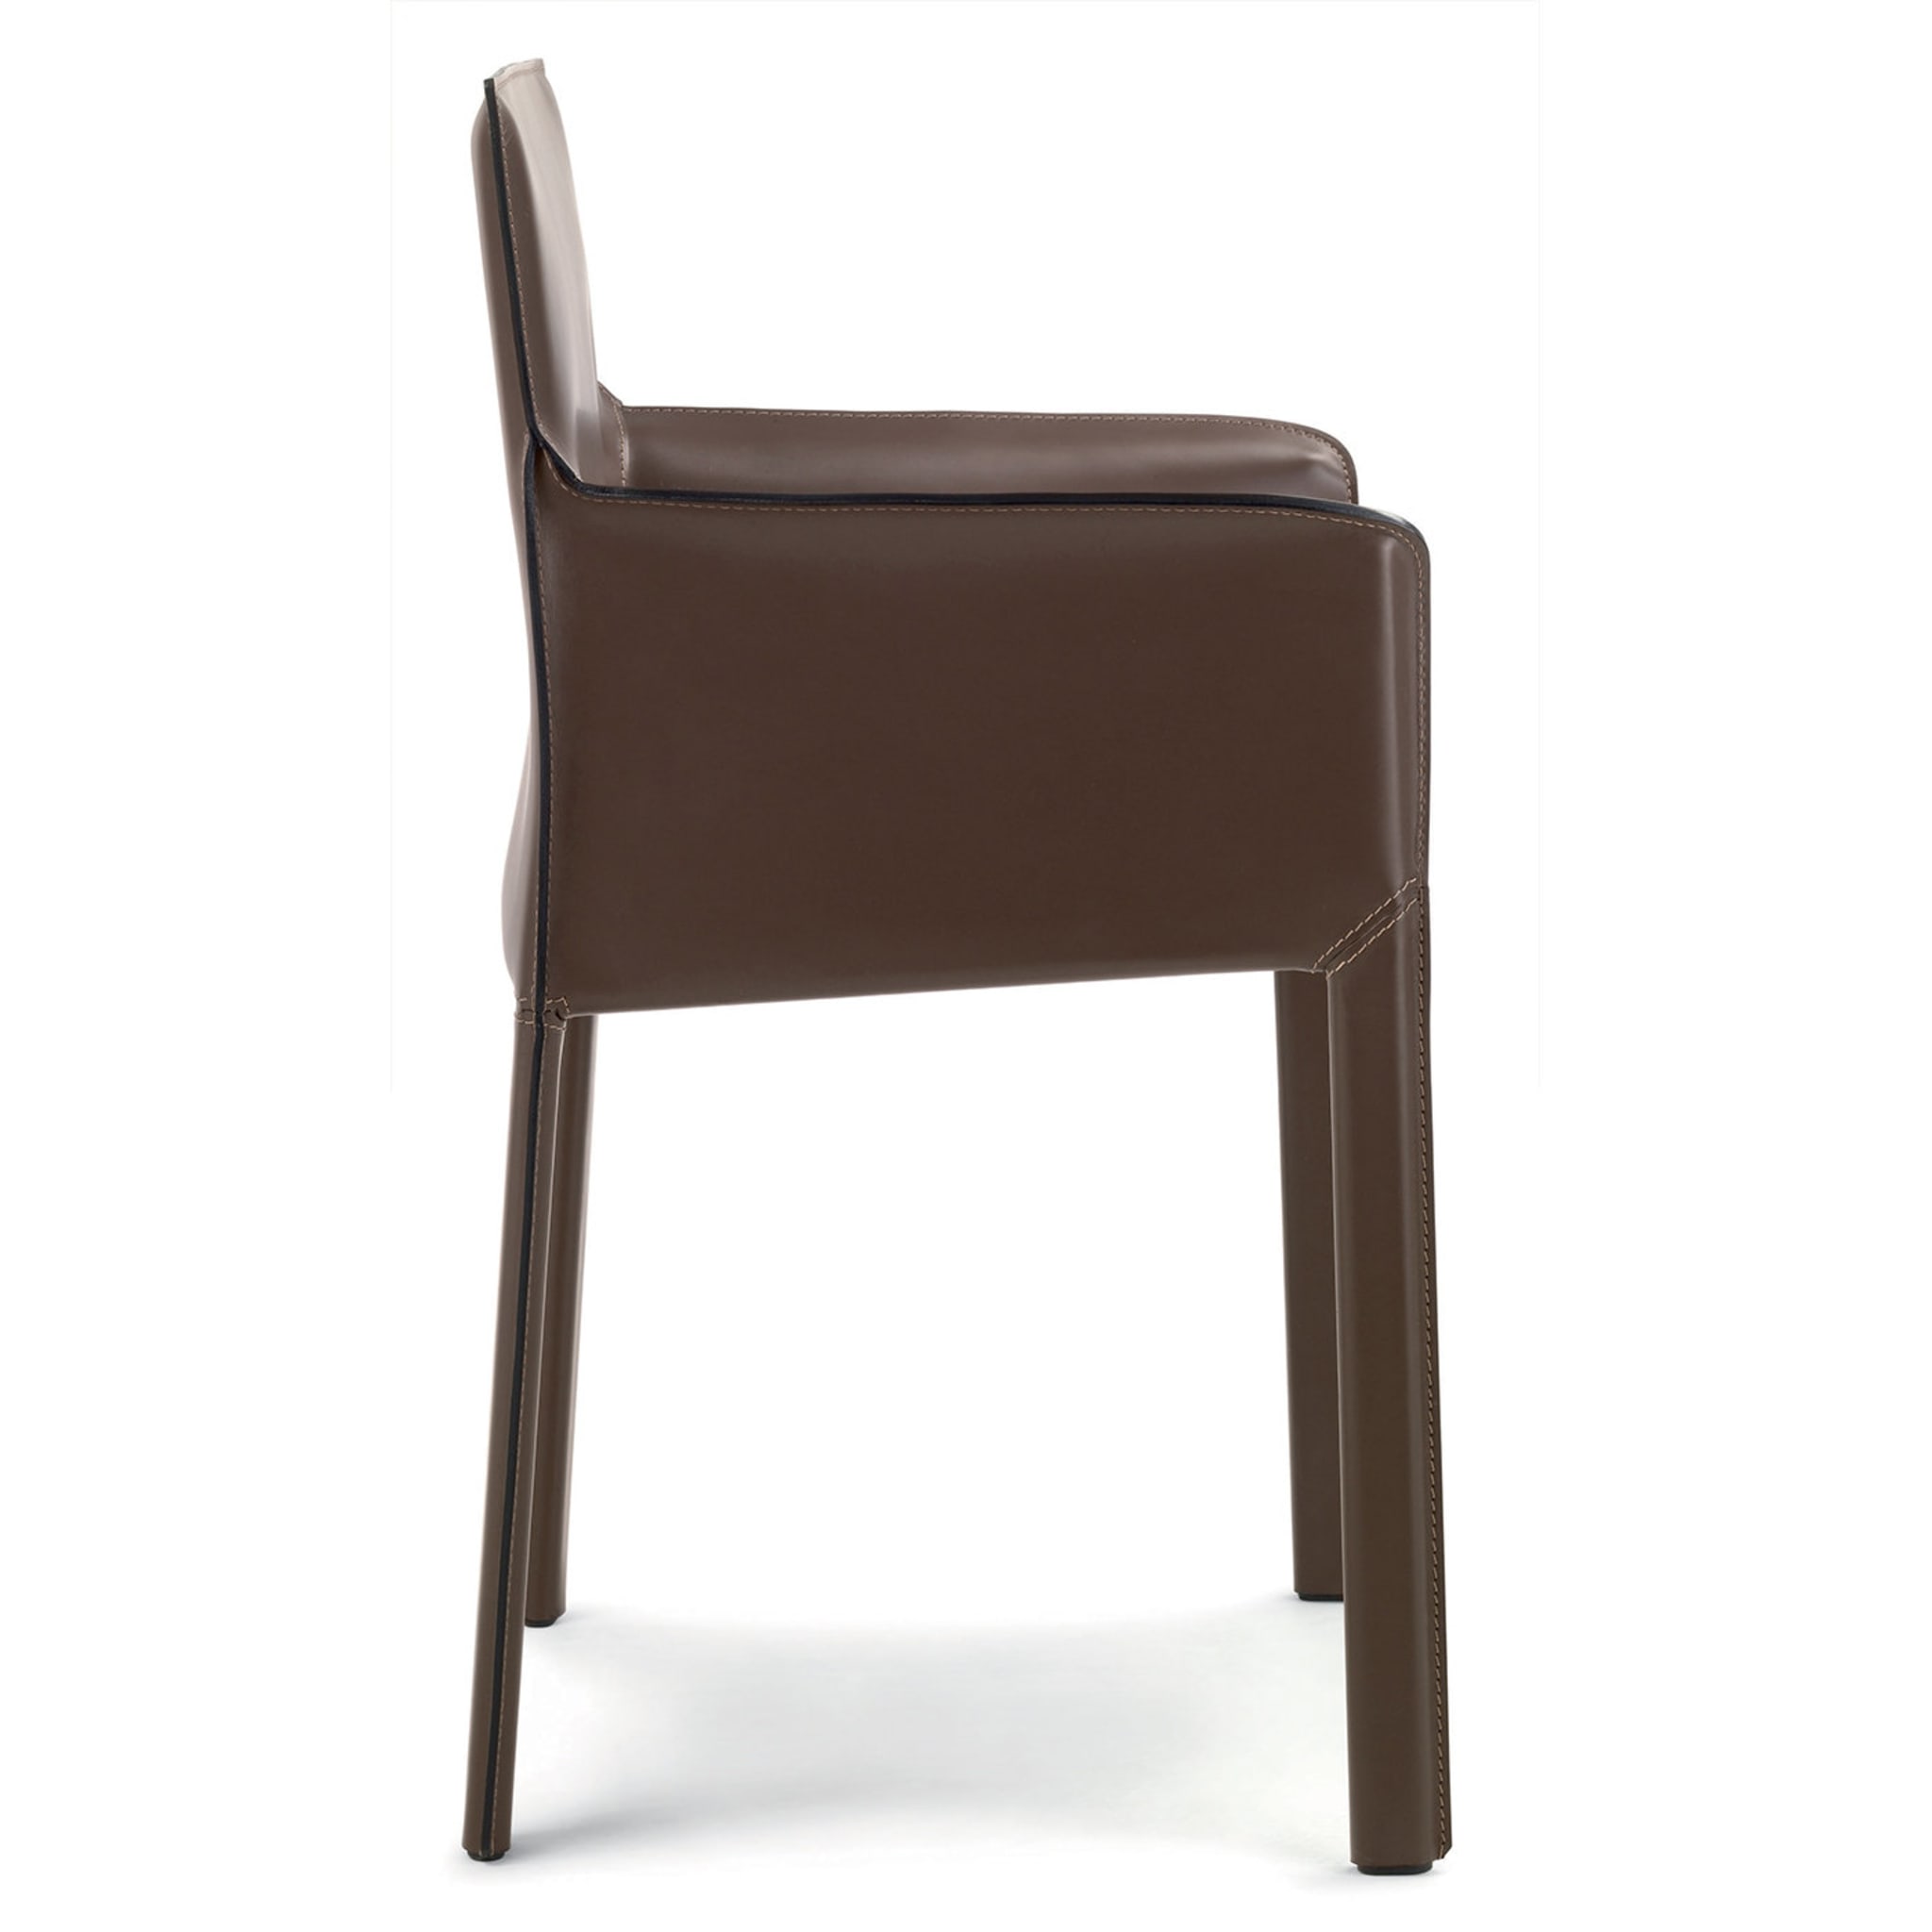 Pasqualina Chair by Grassi&Bianchi - Alternative view 2